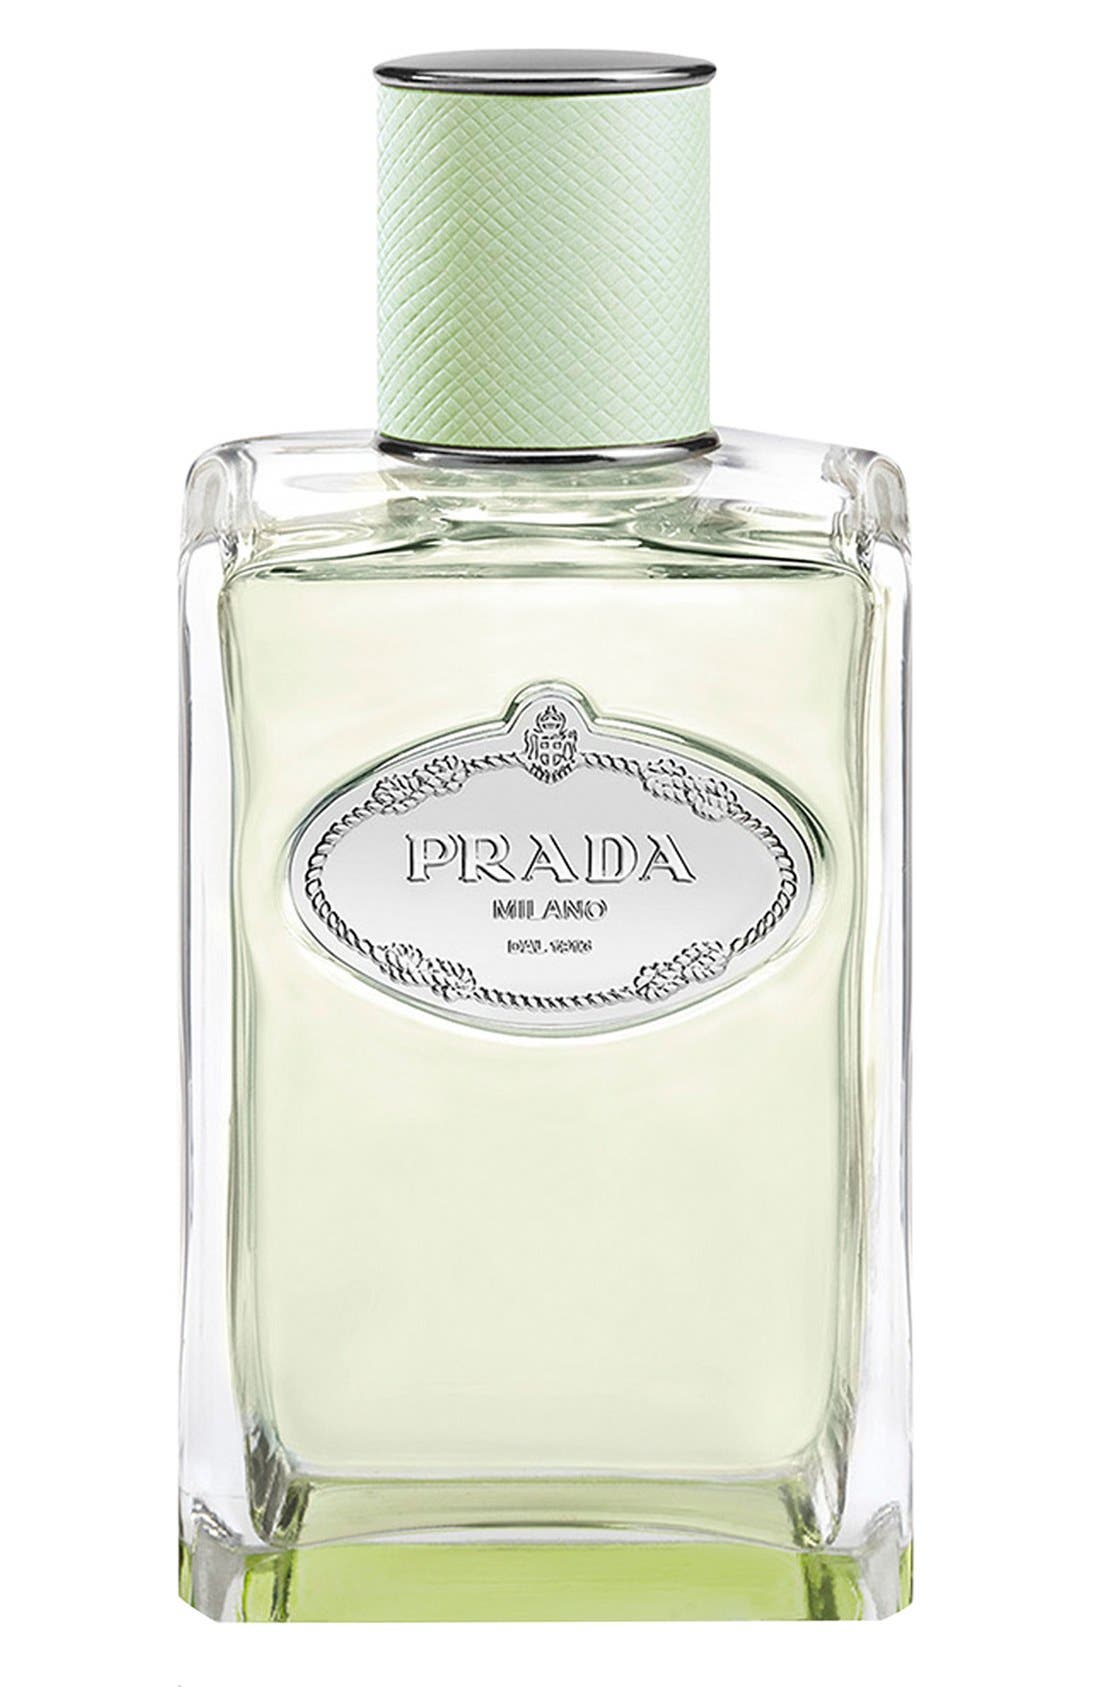 prada classic perfume